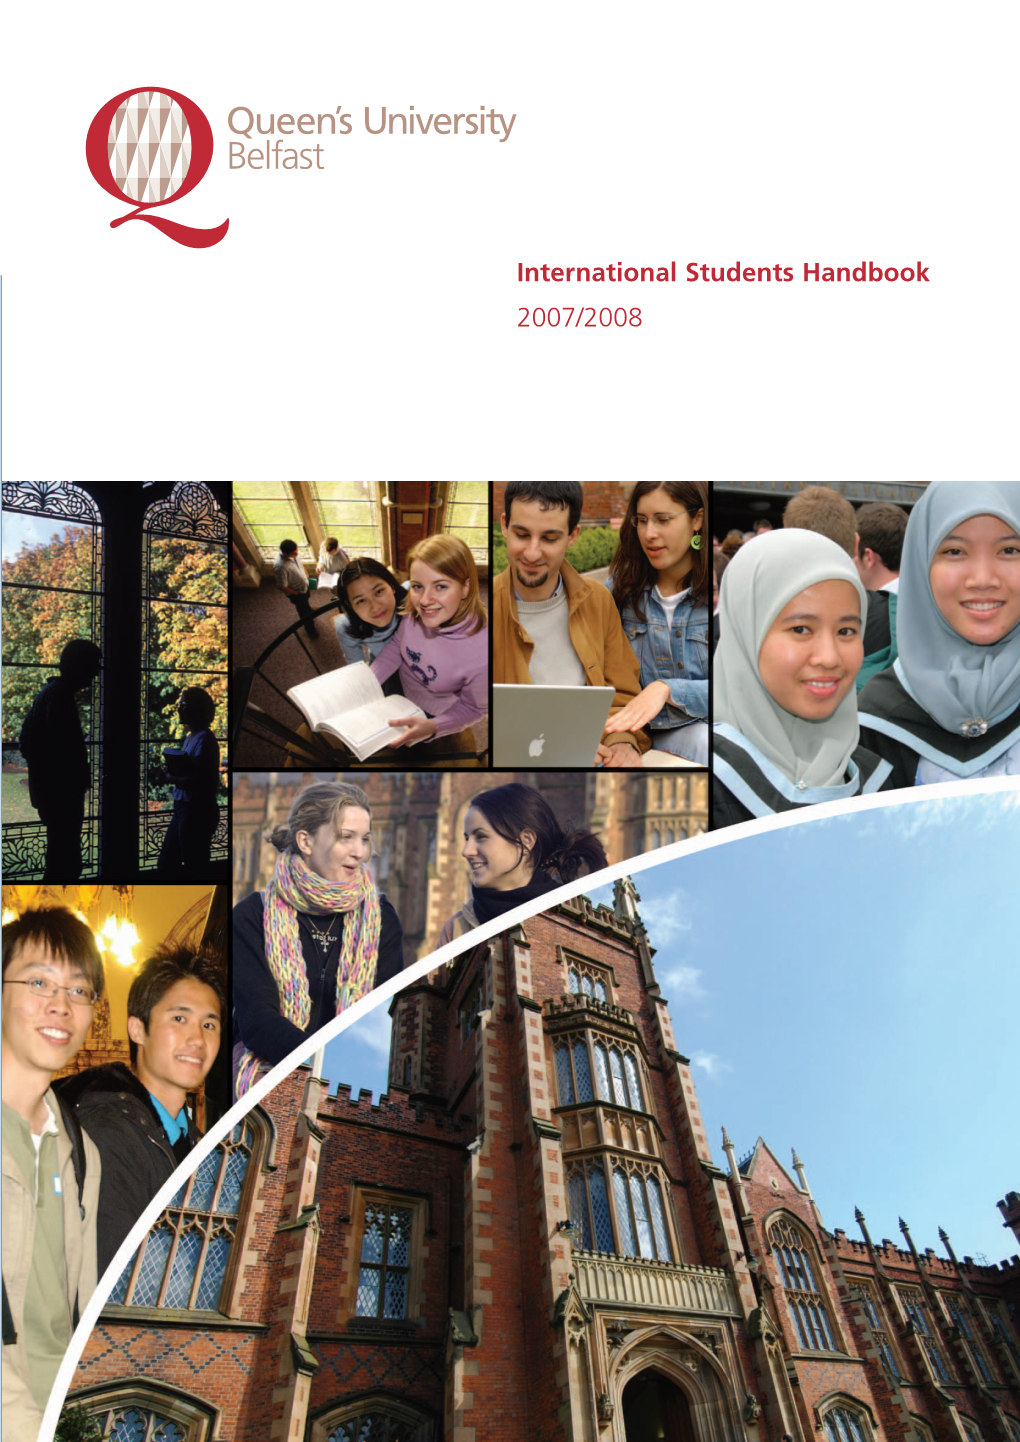 International Students Handbook 2007/2008 Air Links from Northern Ireland